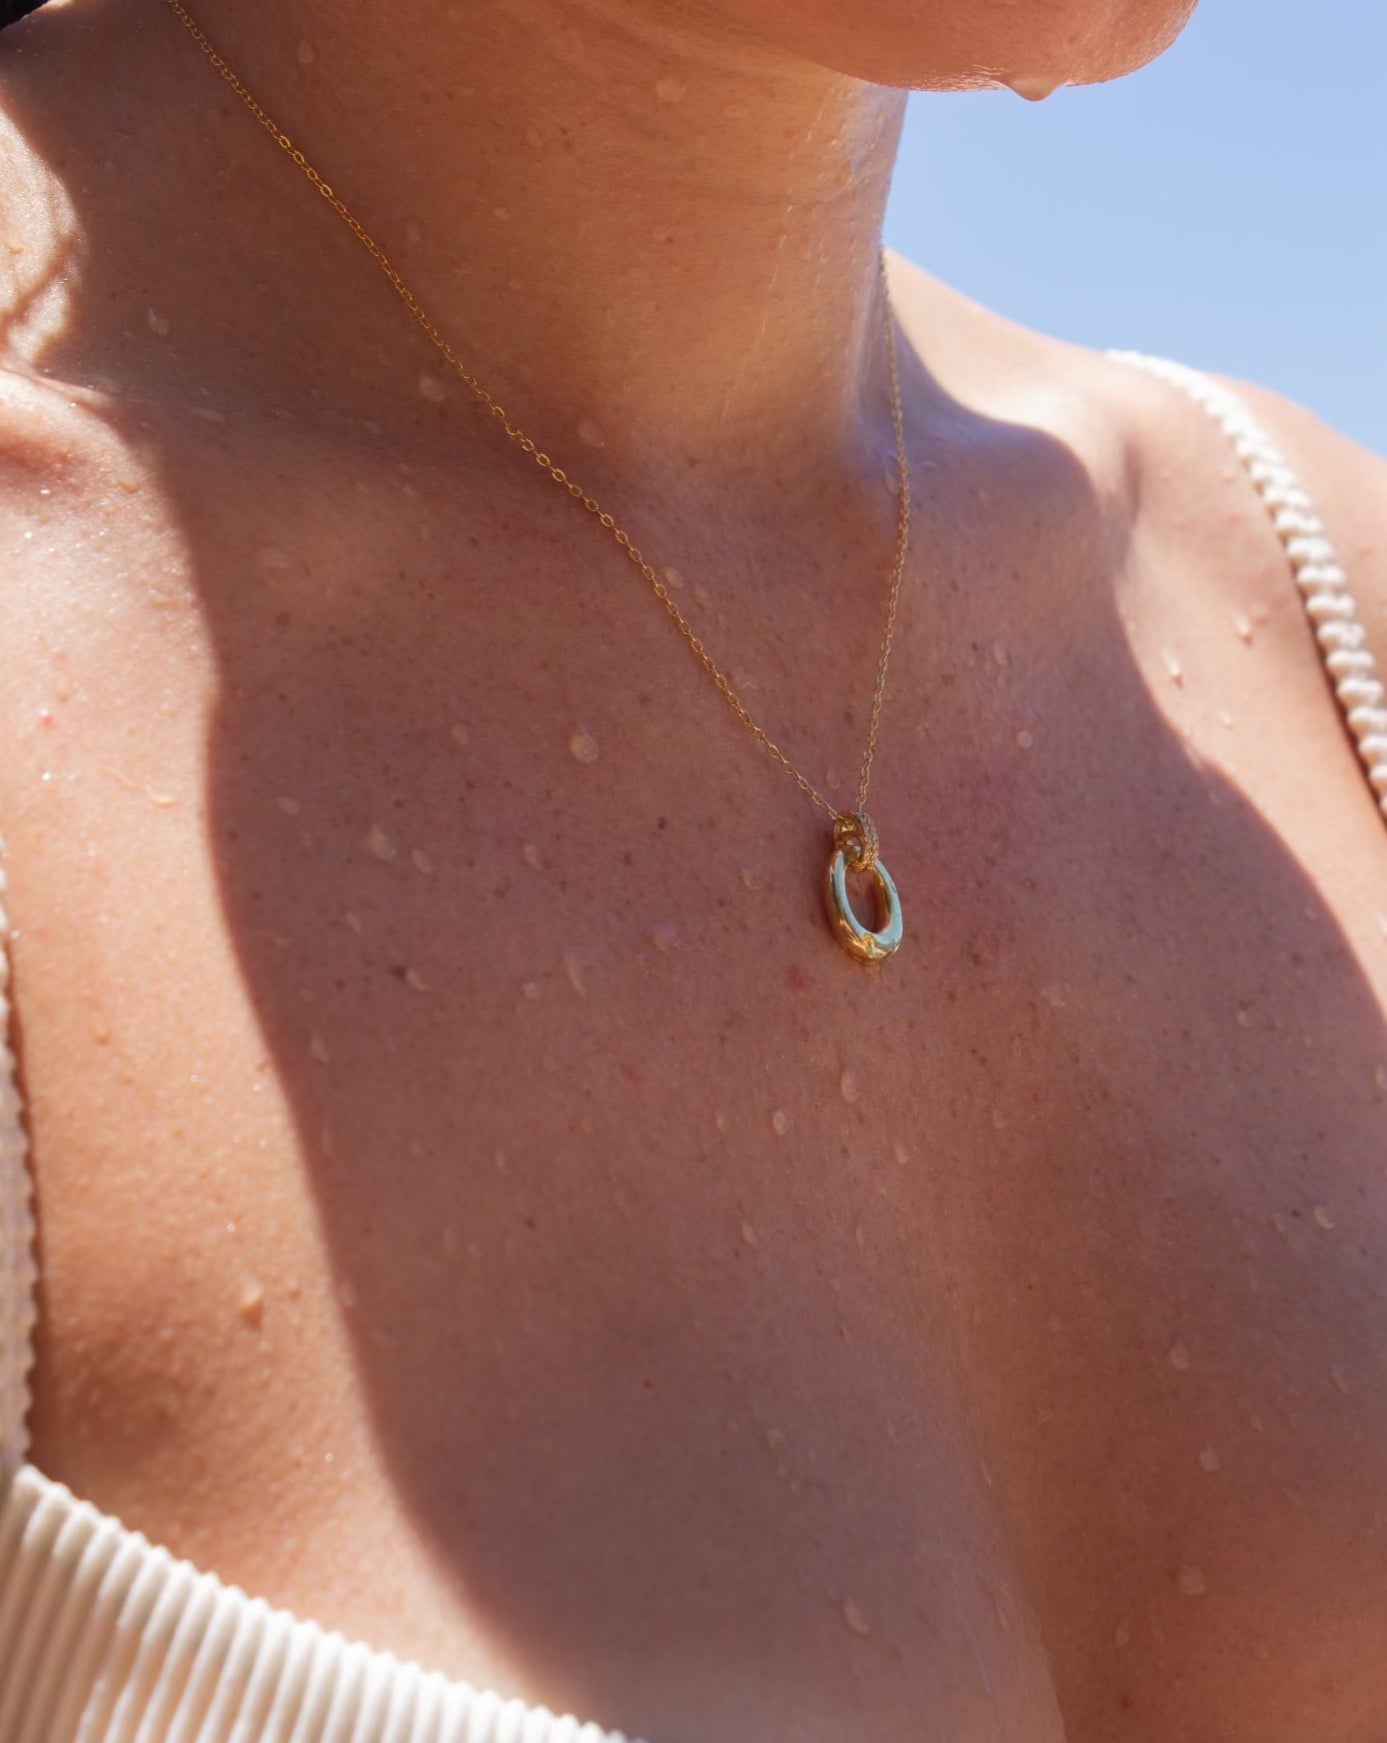 Lara necklace